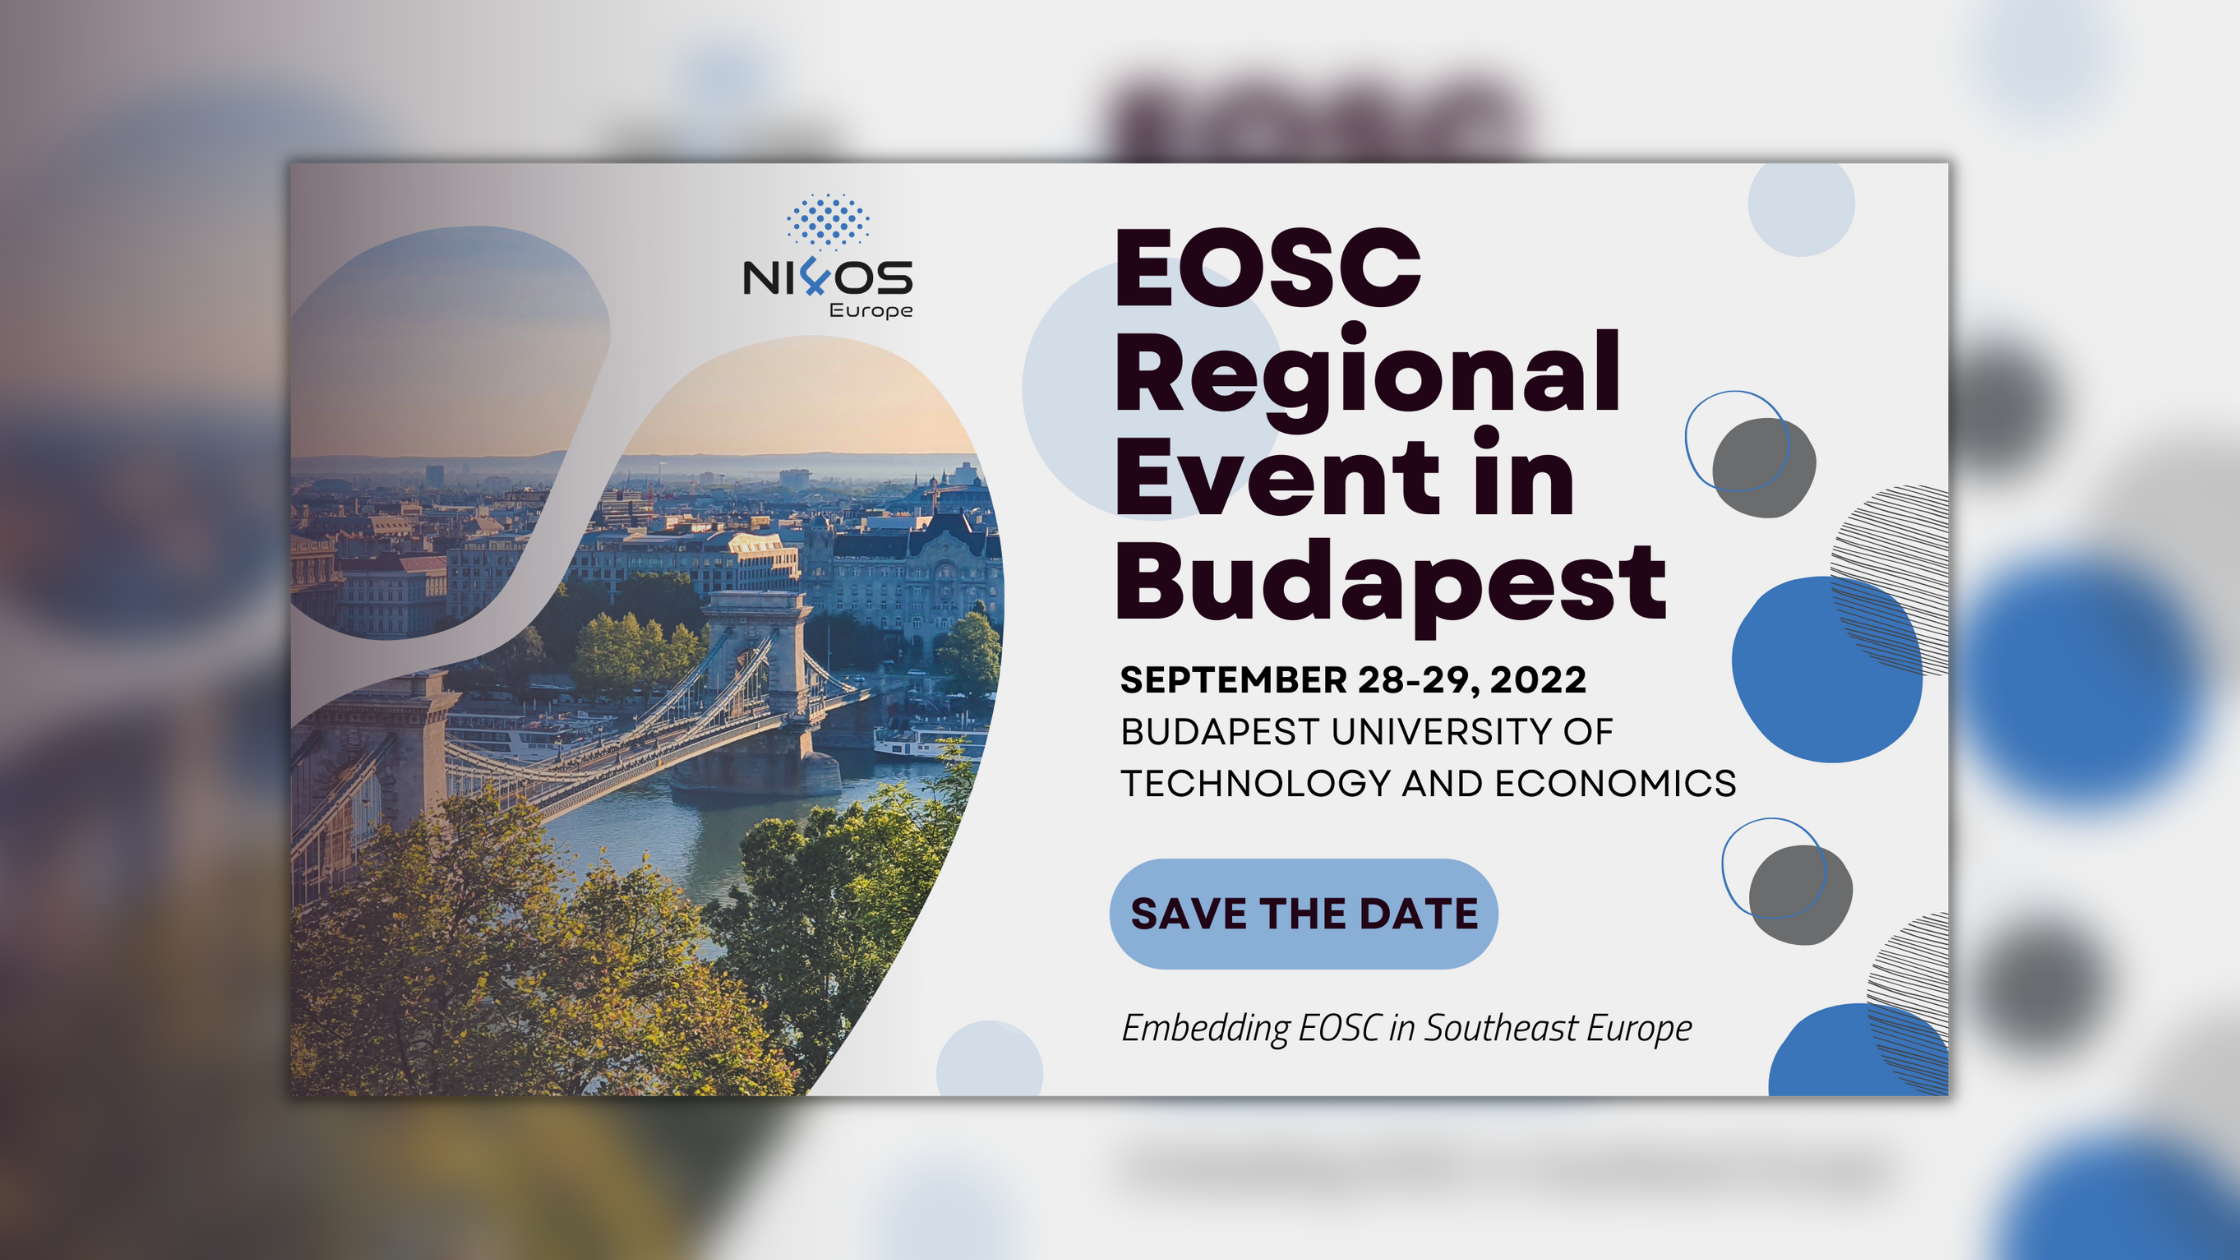 NI4OS-EUROPE Regional Event